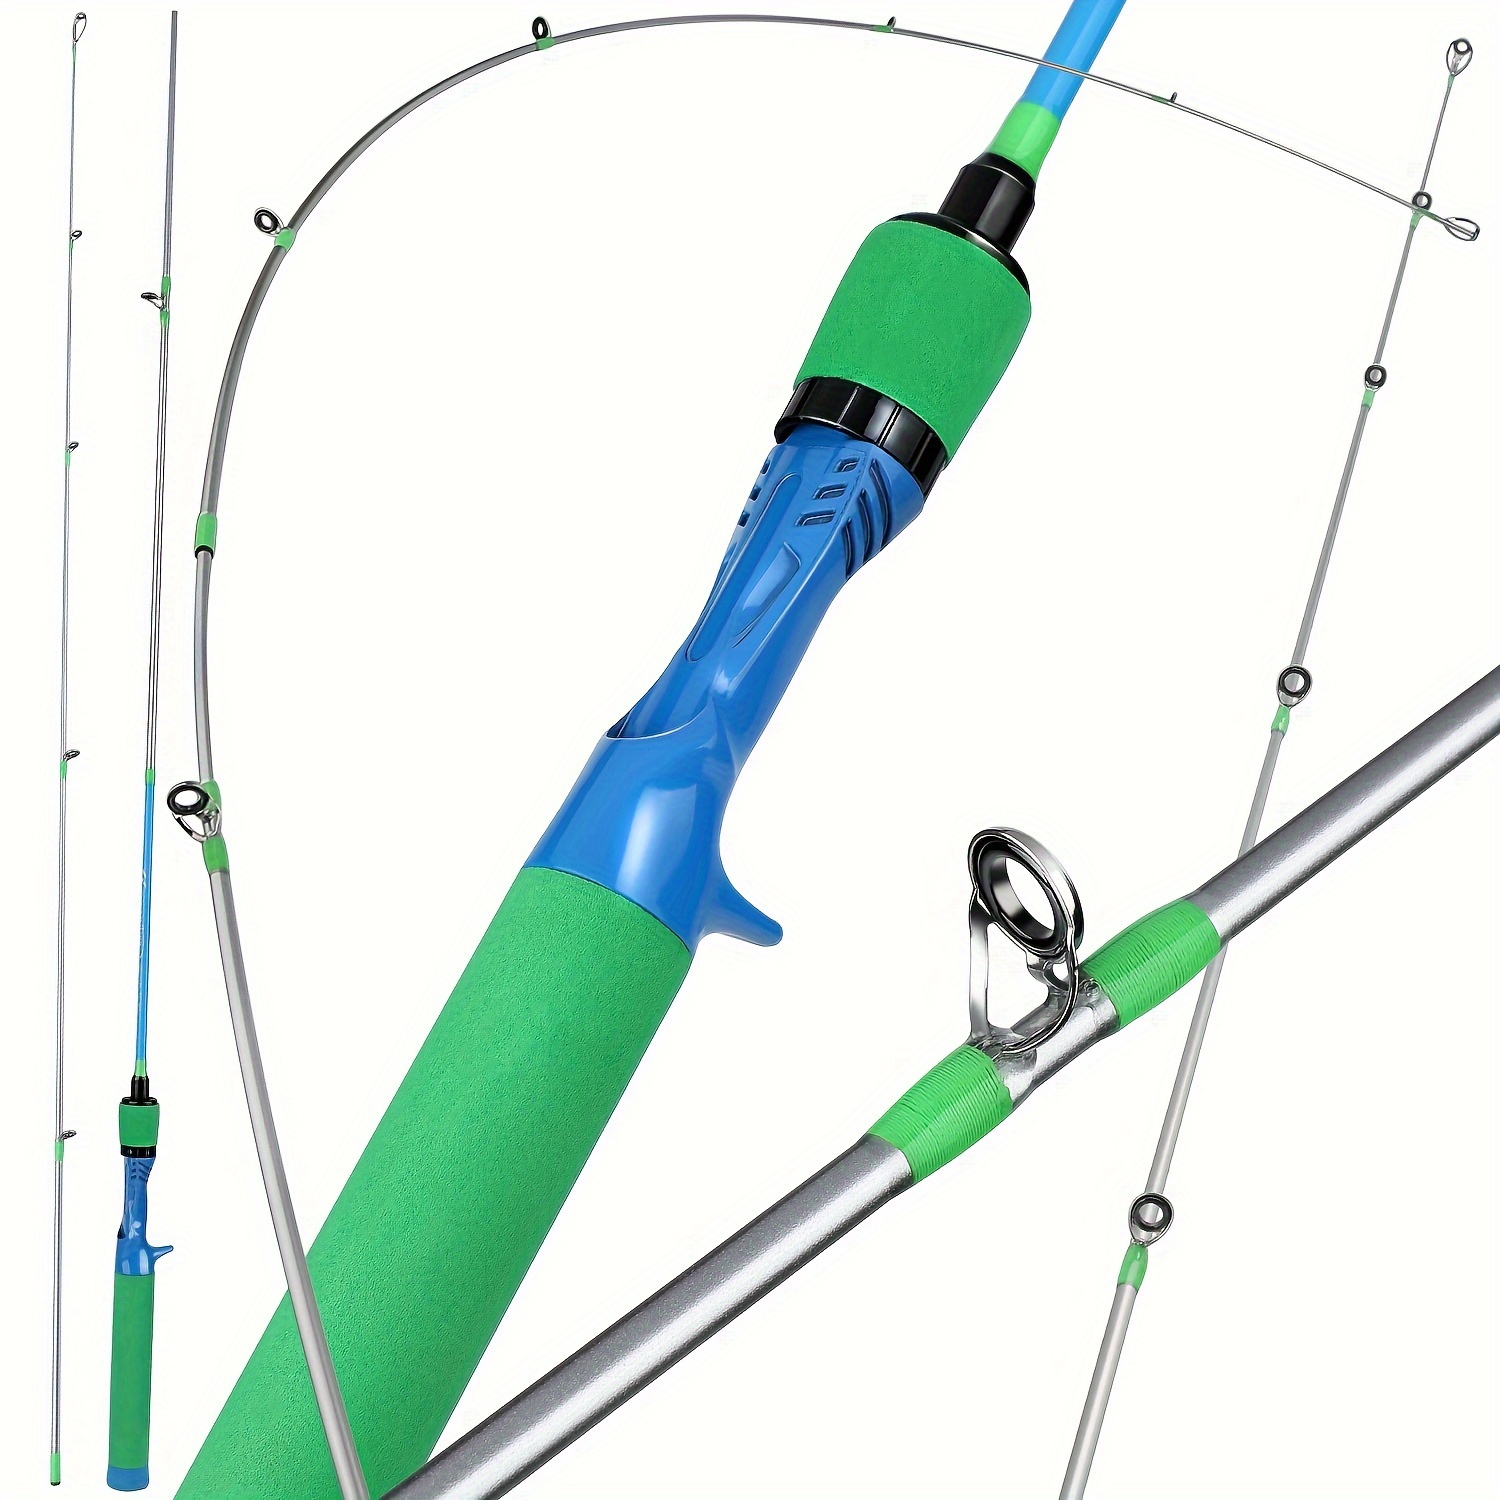 Sougayilang 2-section Fishing Rod, Carbon Fiber Spinning/casting